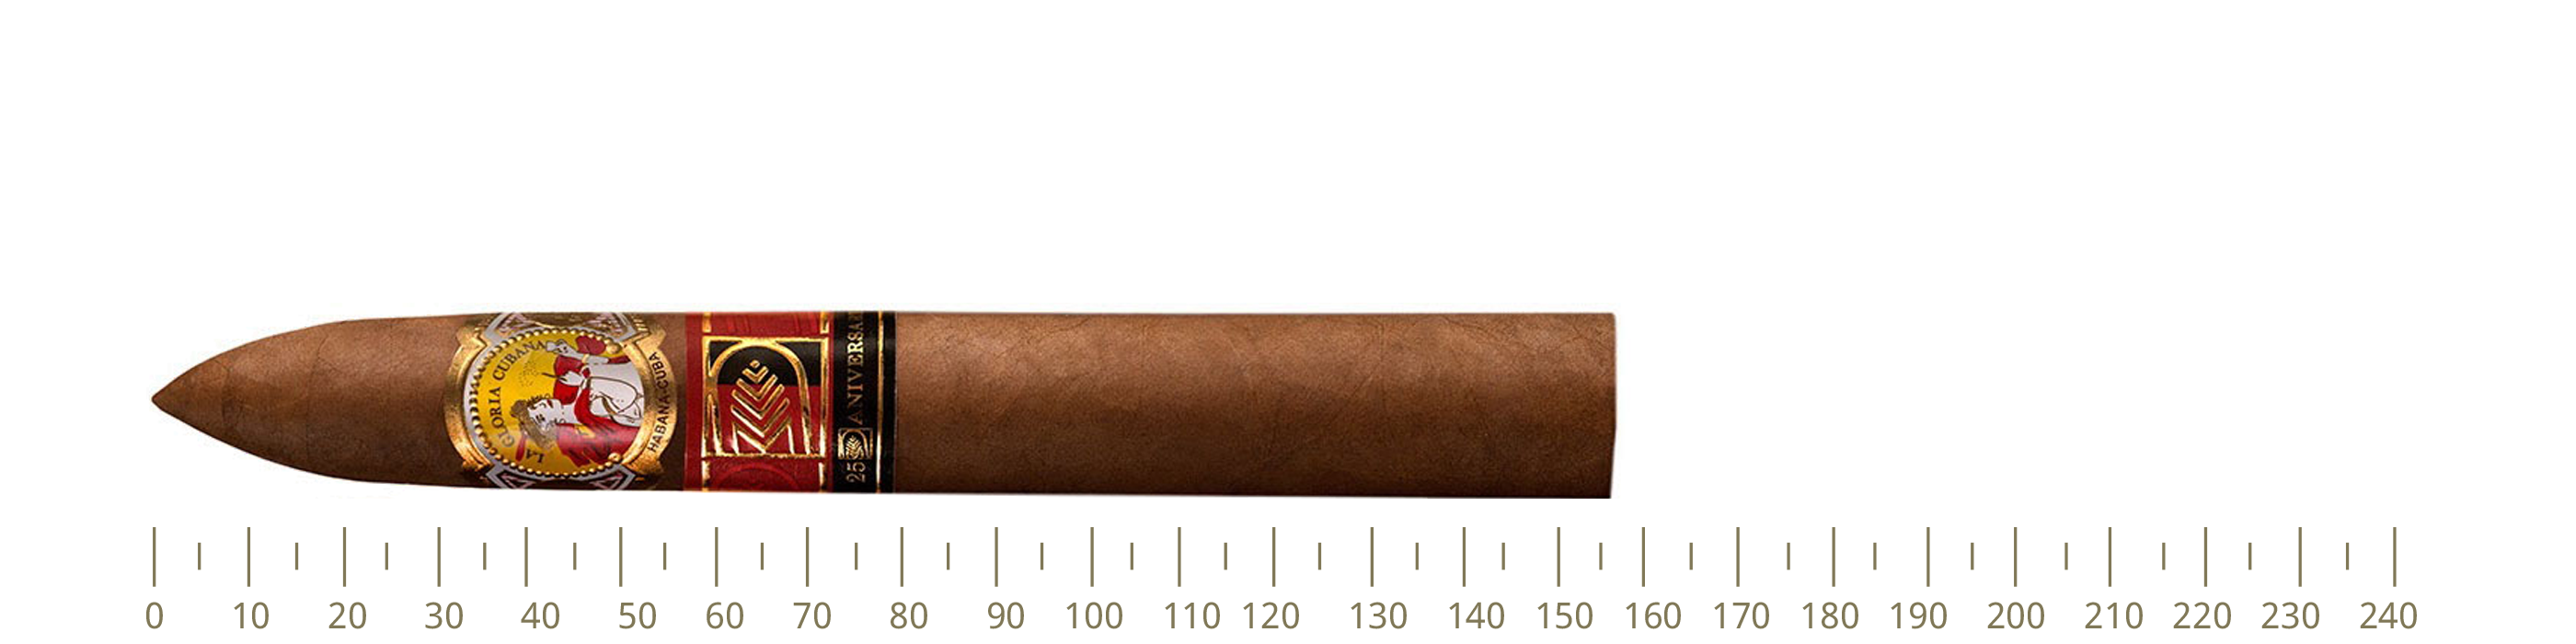 La Gloria Cubana 25 Aniversario 30 Cigars (Cdh15)